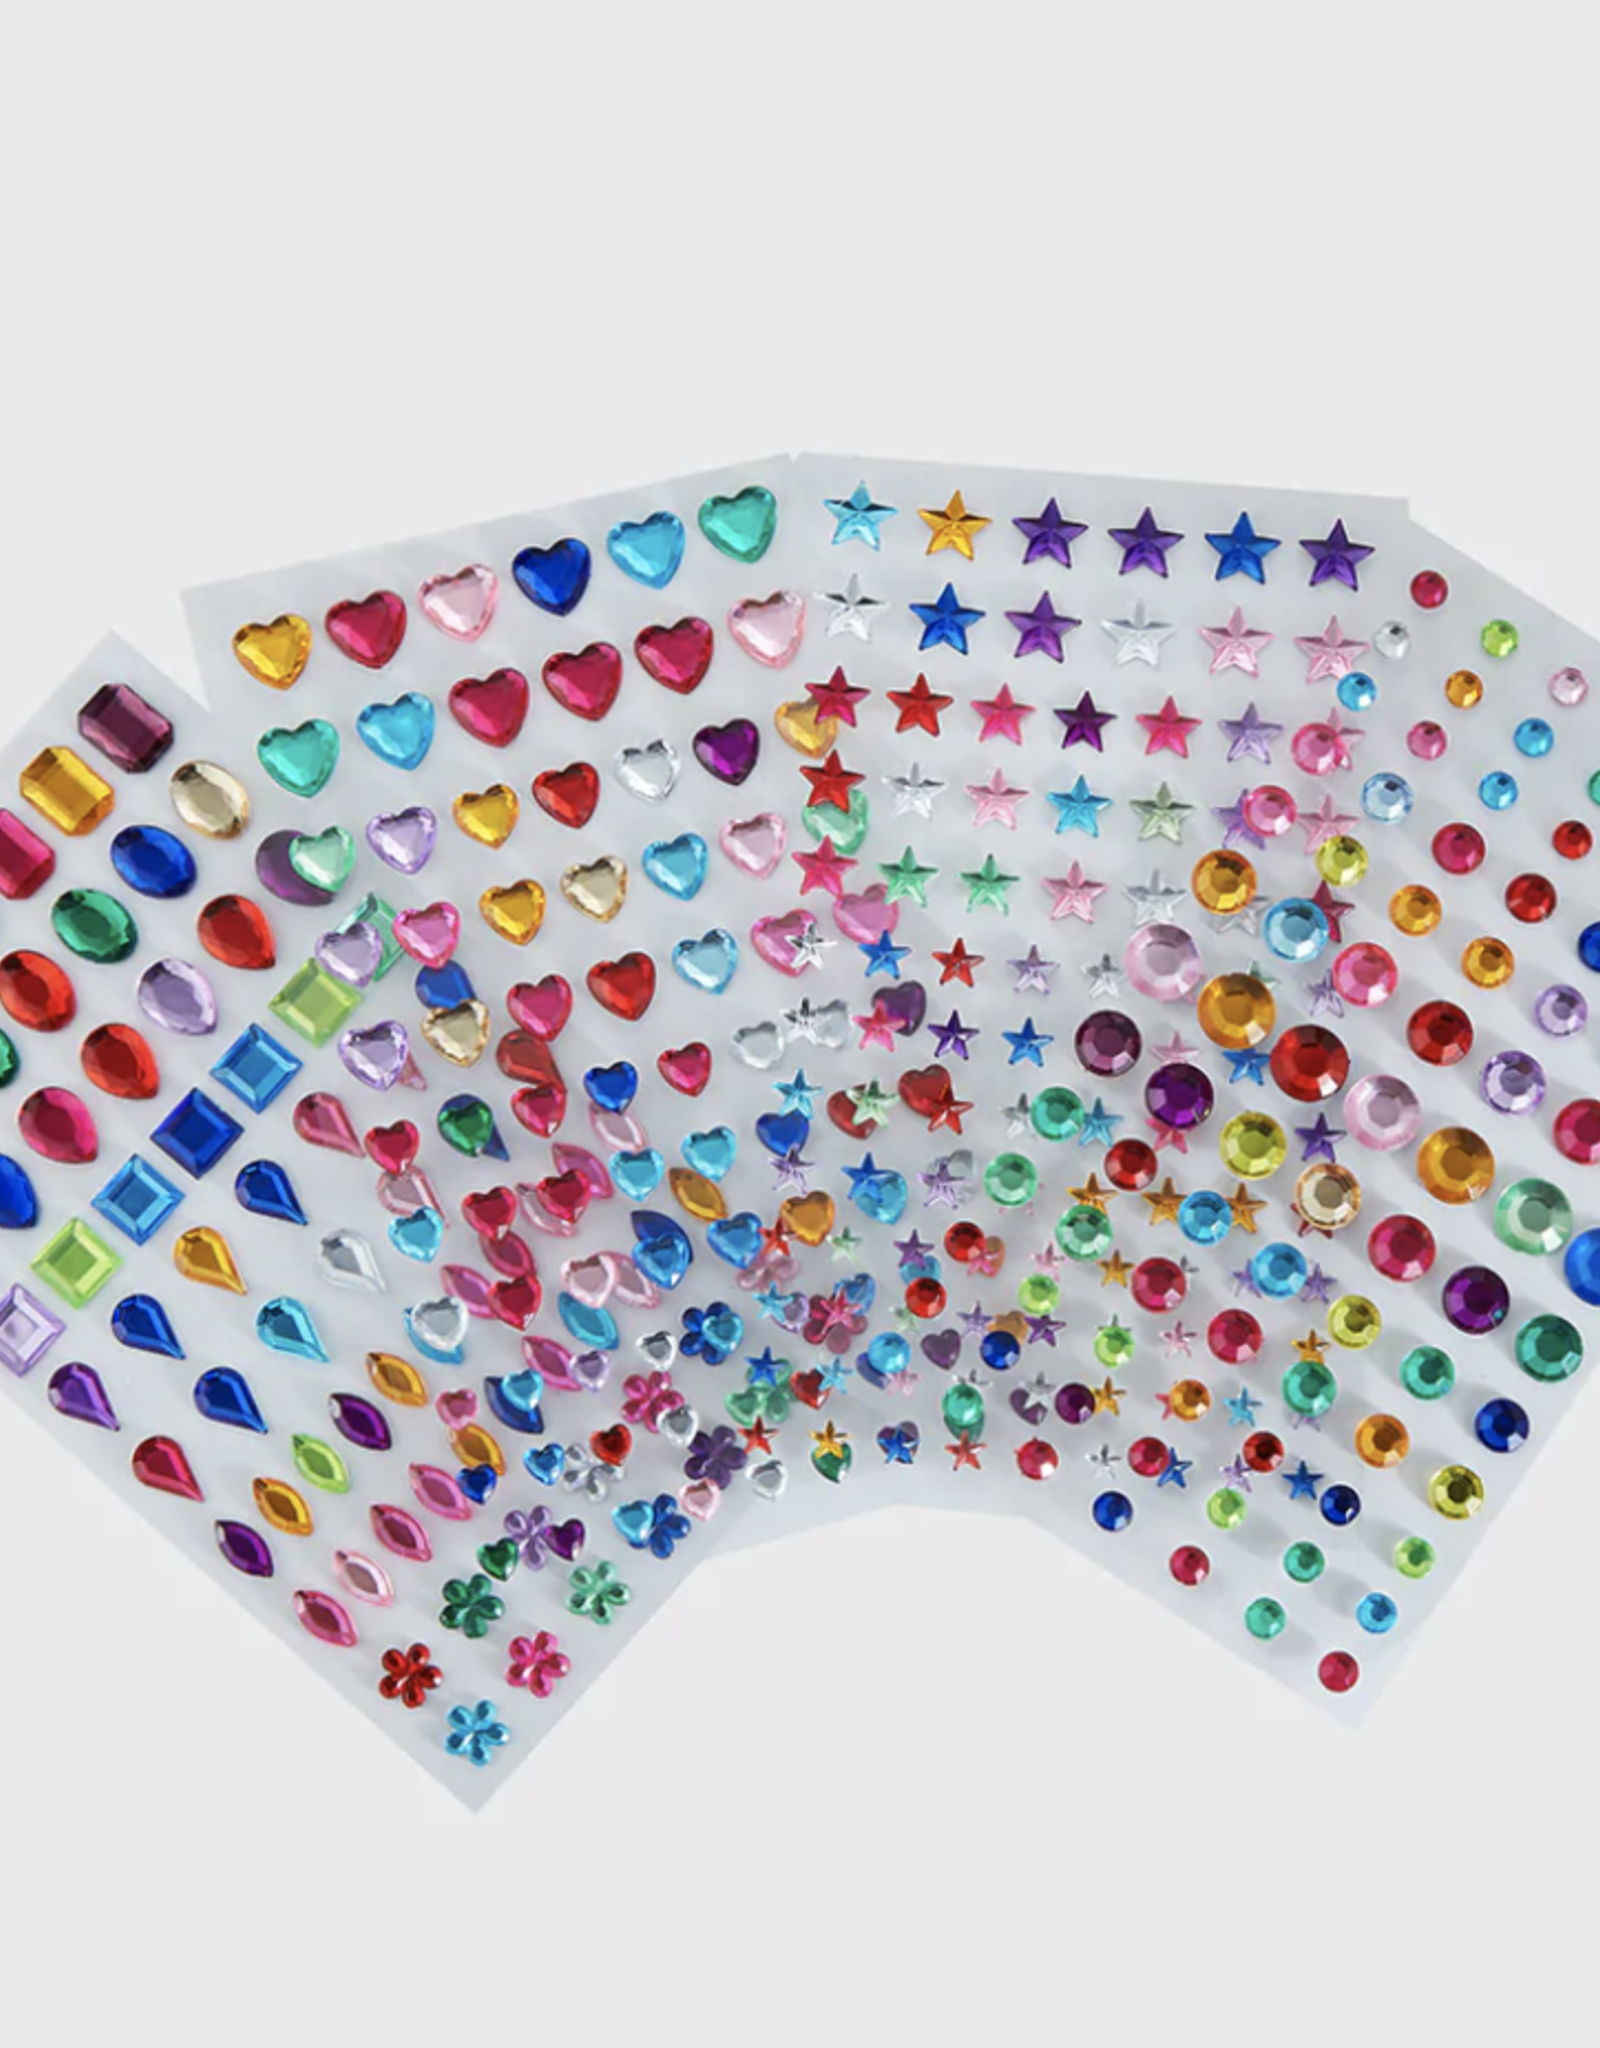 Super Smalls everyday sparkle gem sticker book